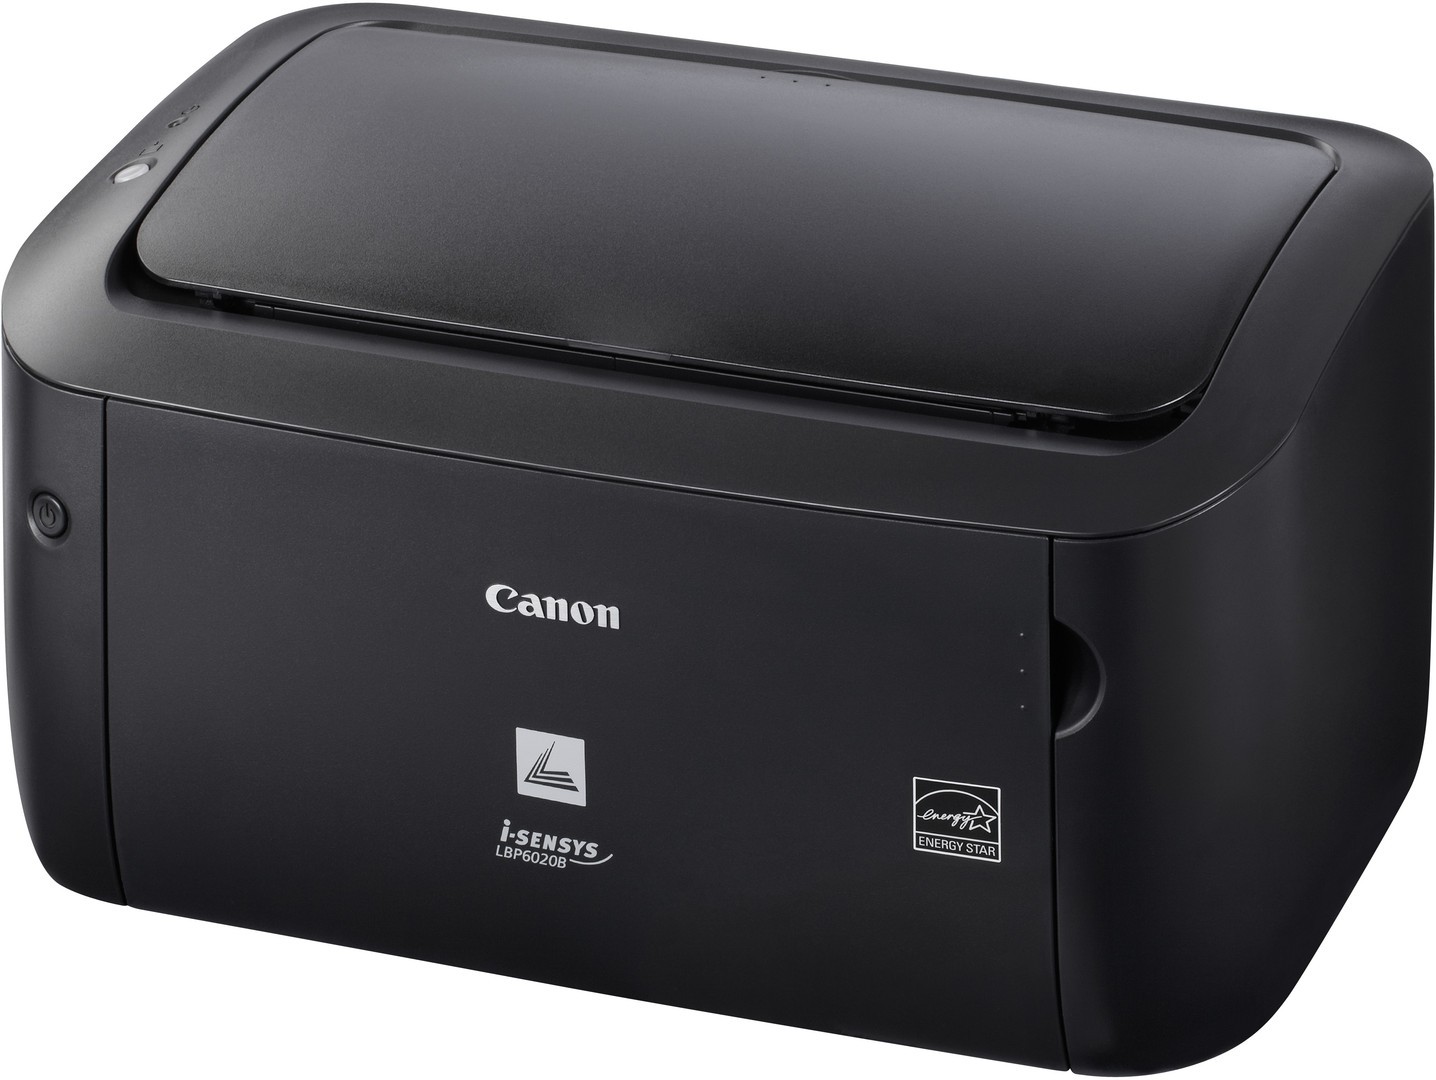 Installer Imprimante Canon Lbp 3010 : TÉLÉCHARGER DRIVER CANON I-SENSYS ...